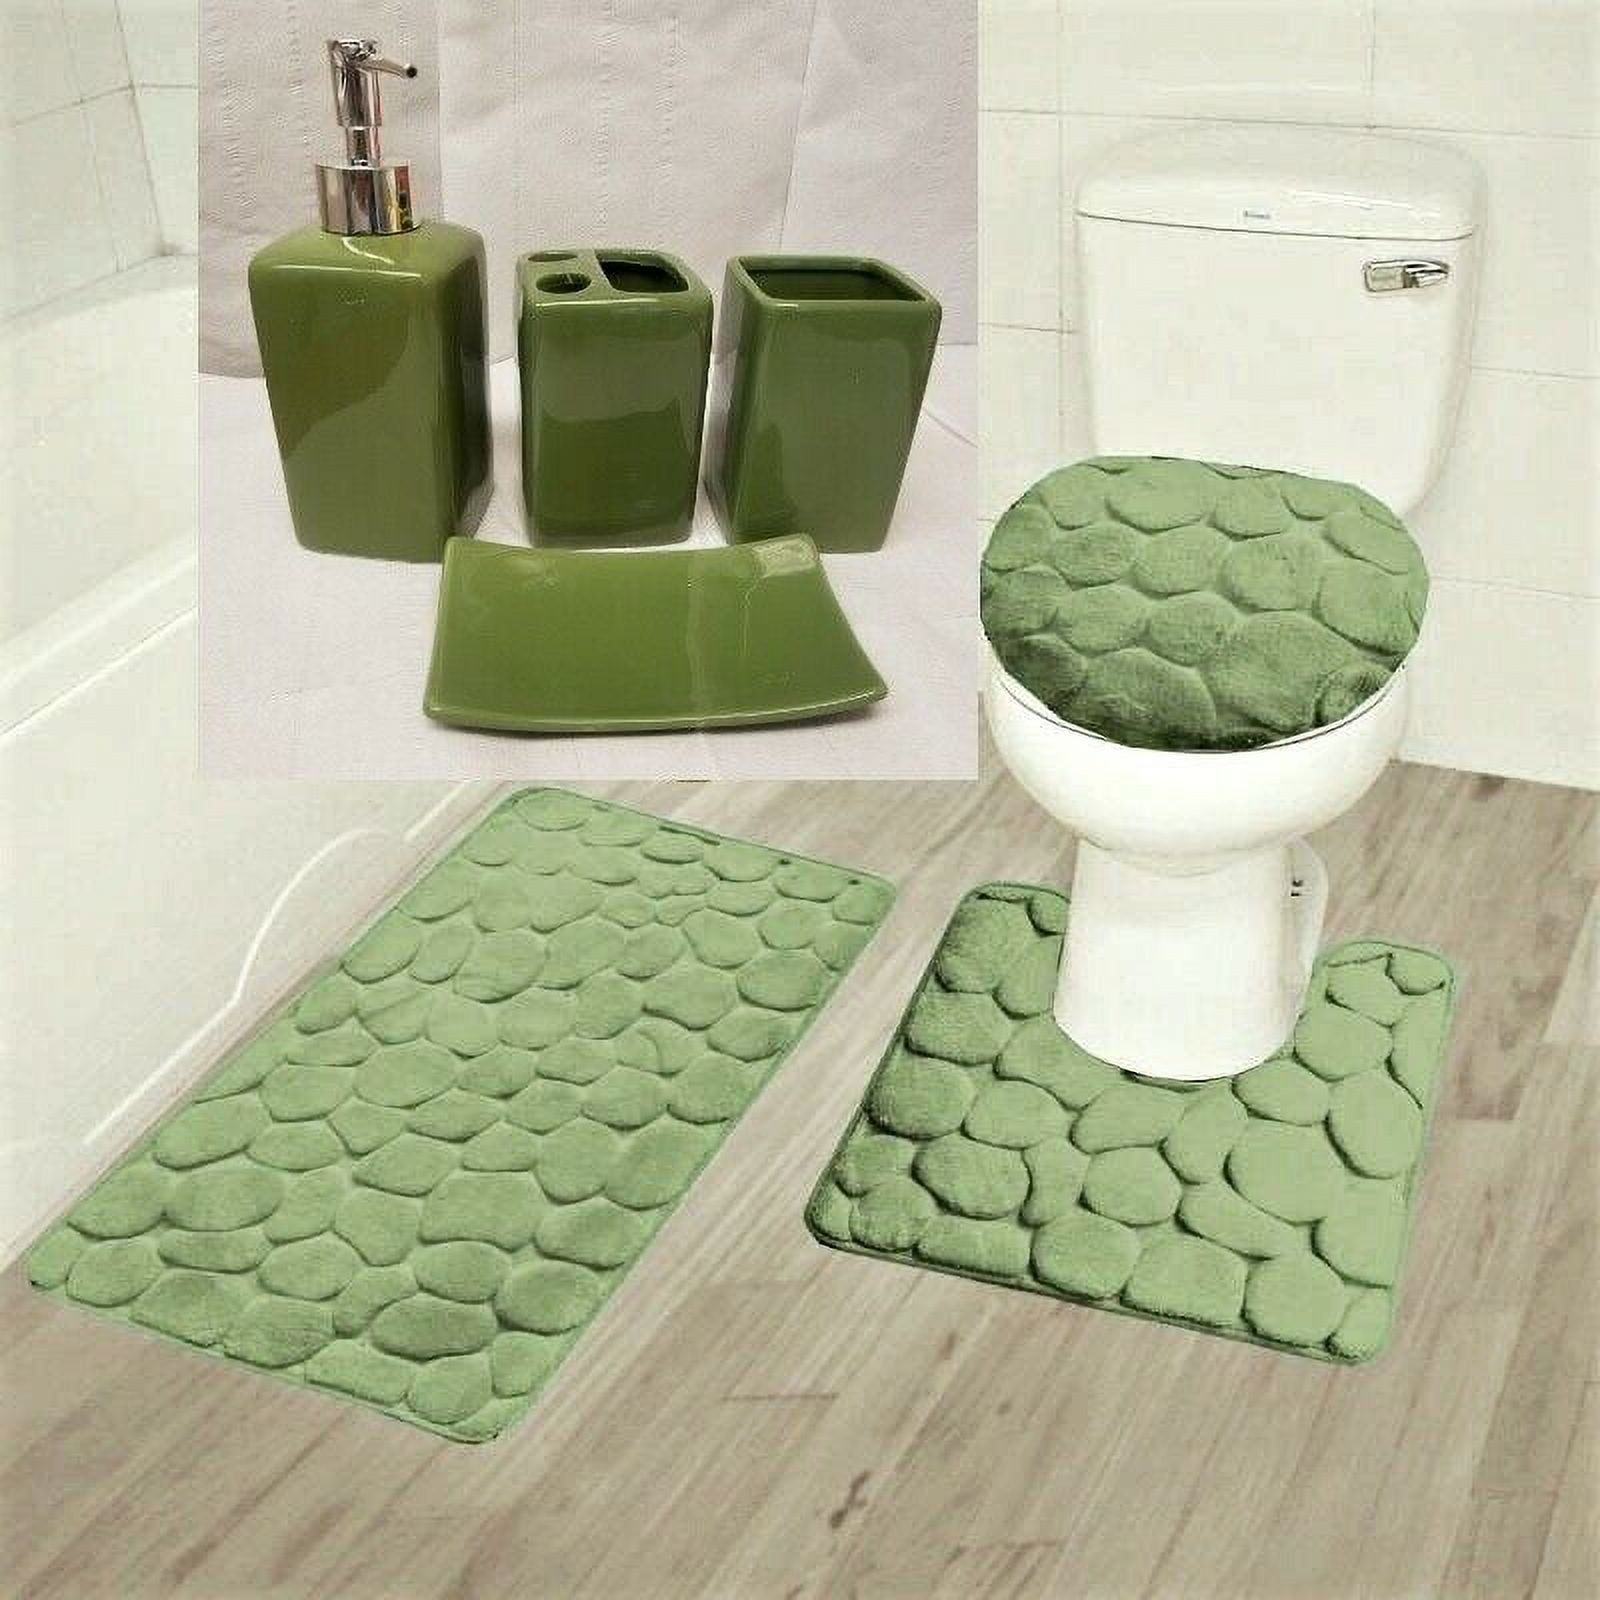 Fancy 3pc bath rug Set toilette seat cover Non-slip Dark green color #6  flufly super soft for bathroom décor 